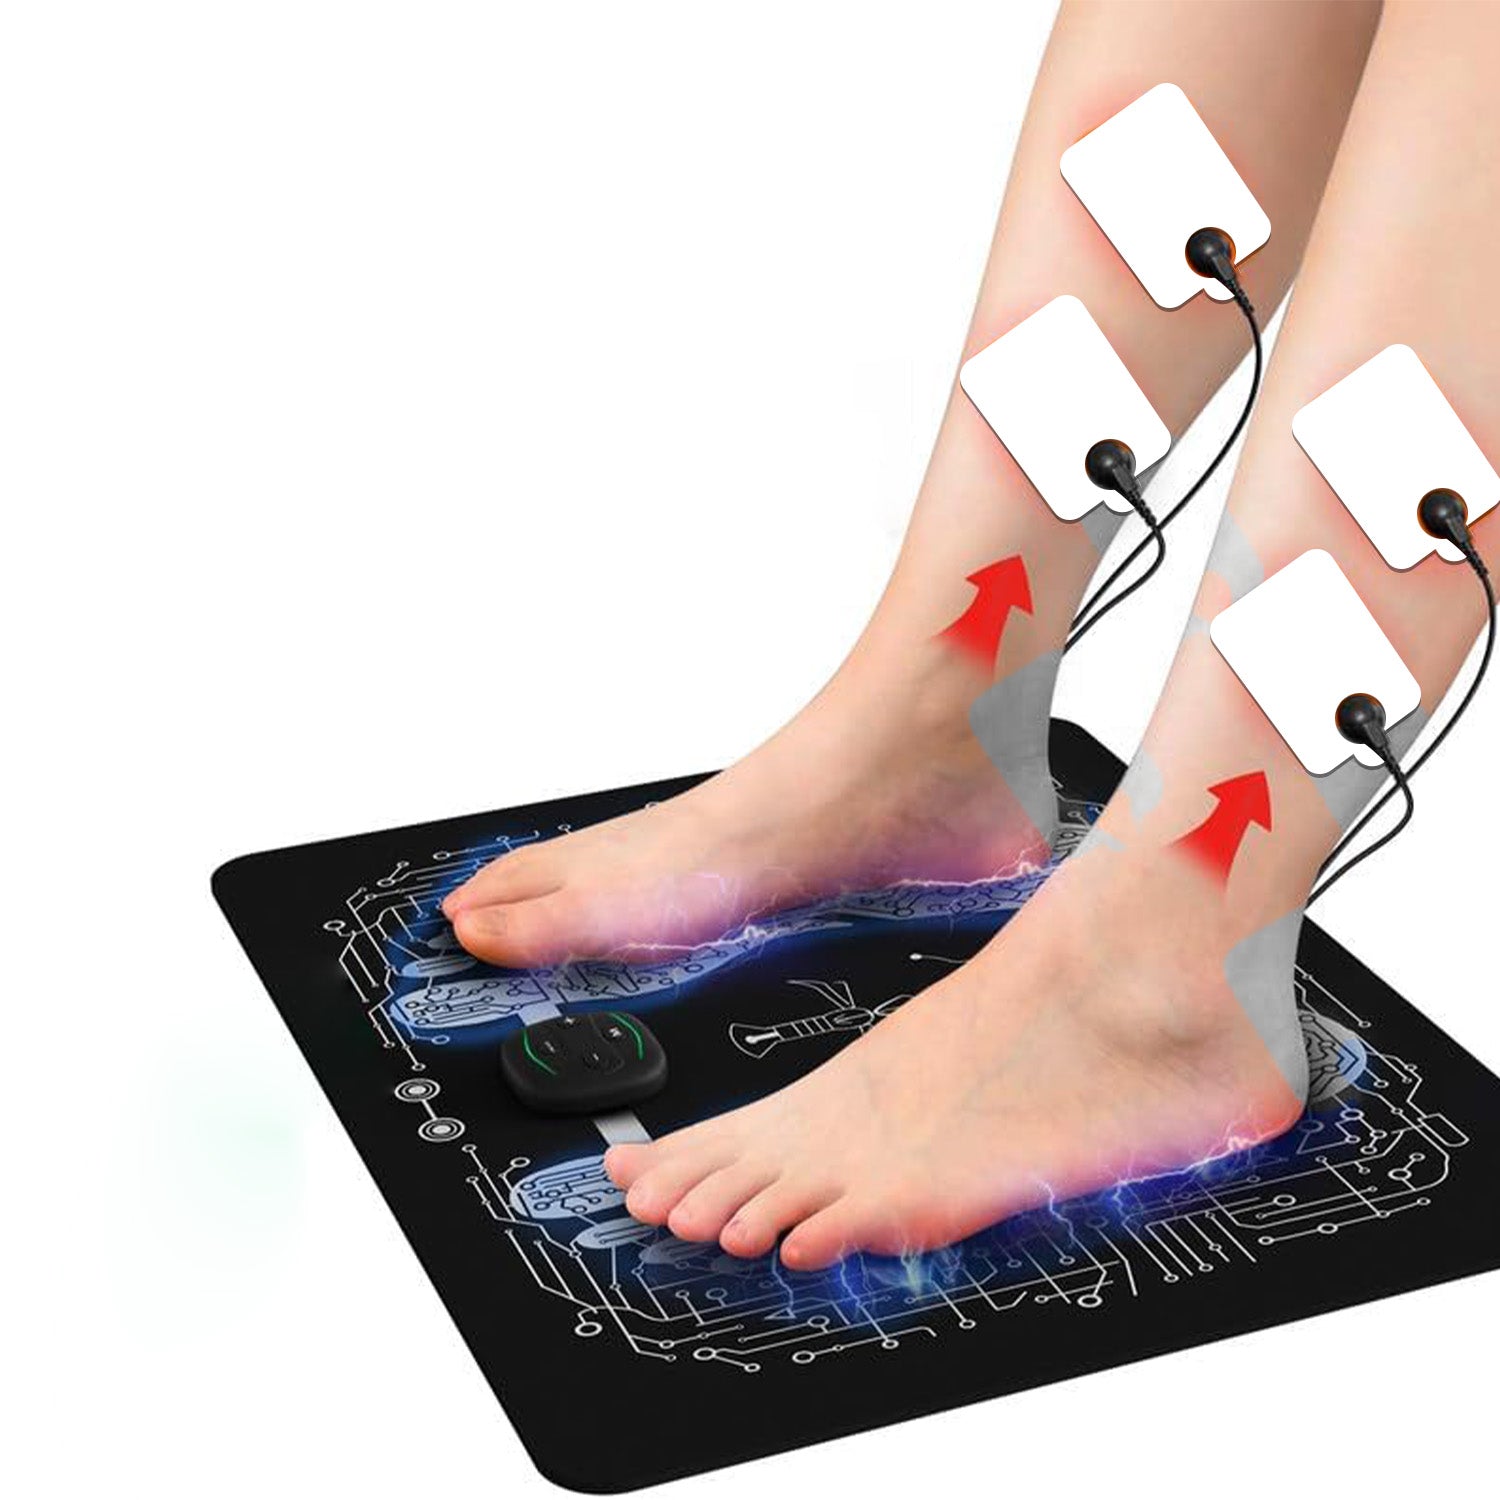 EMS Foot Massage Pad